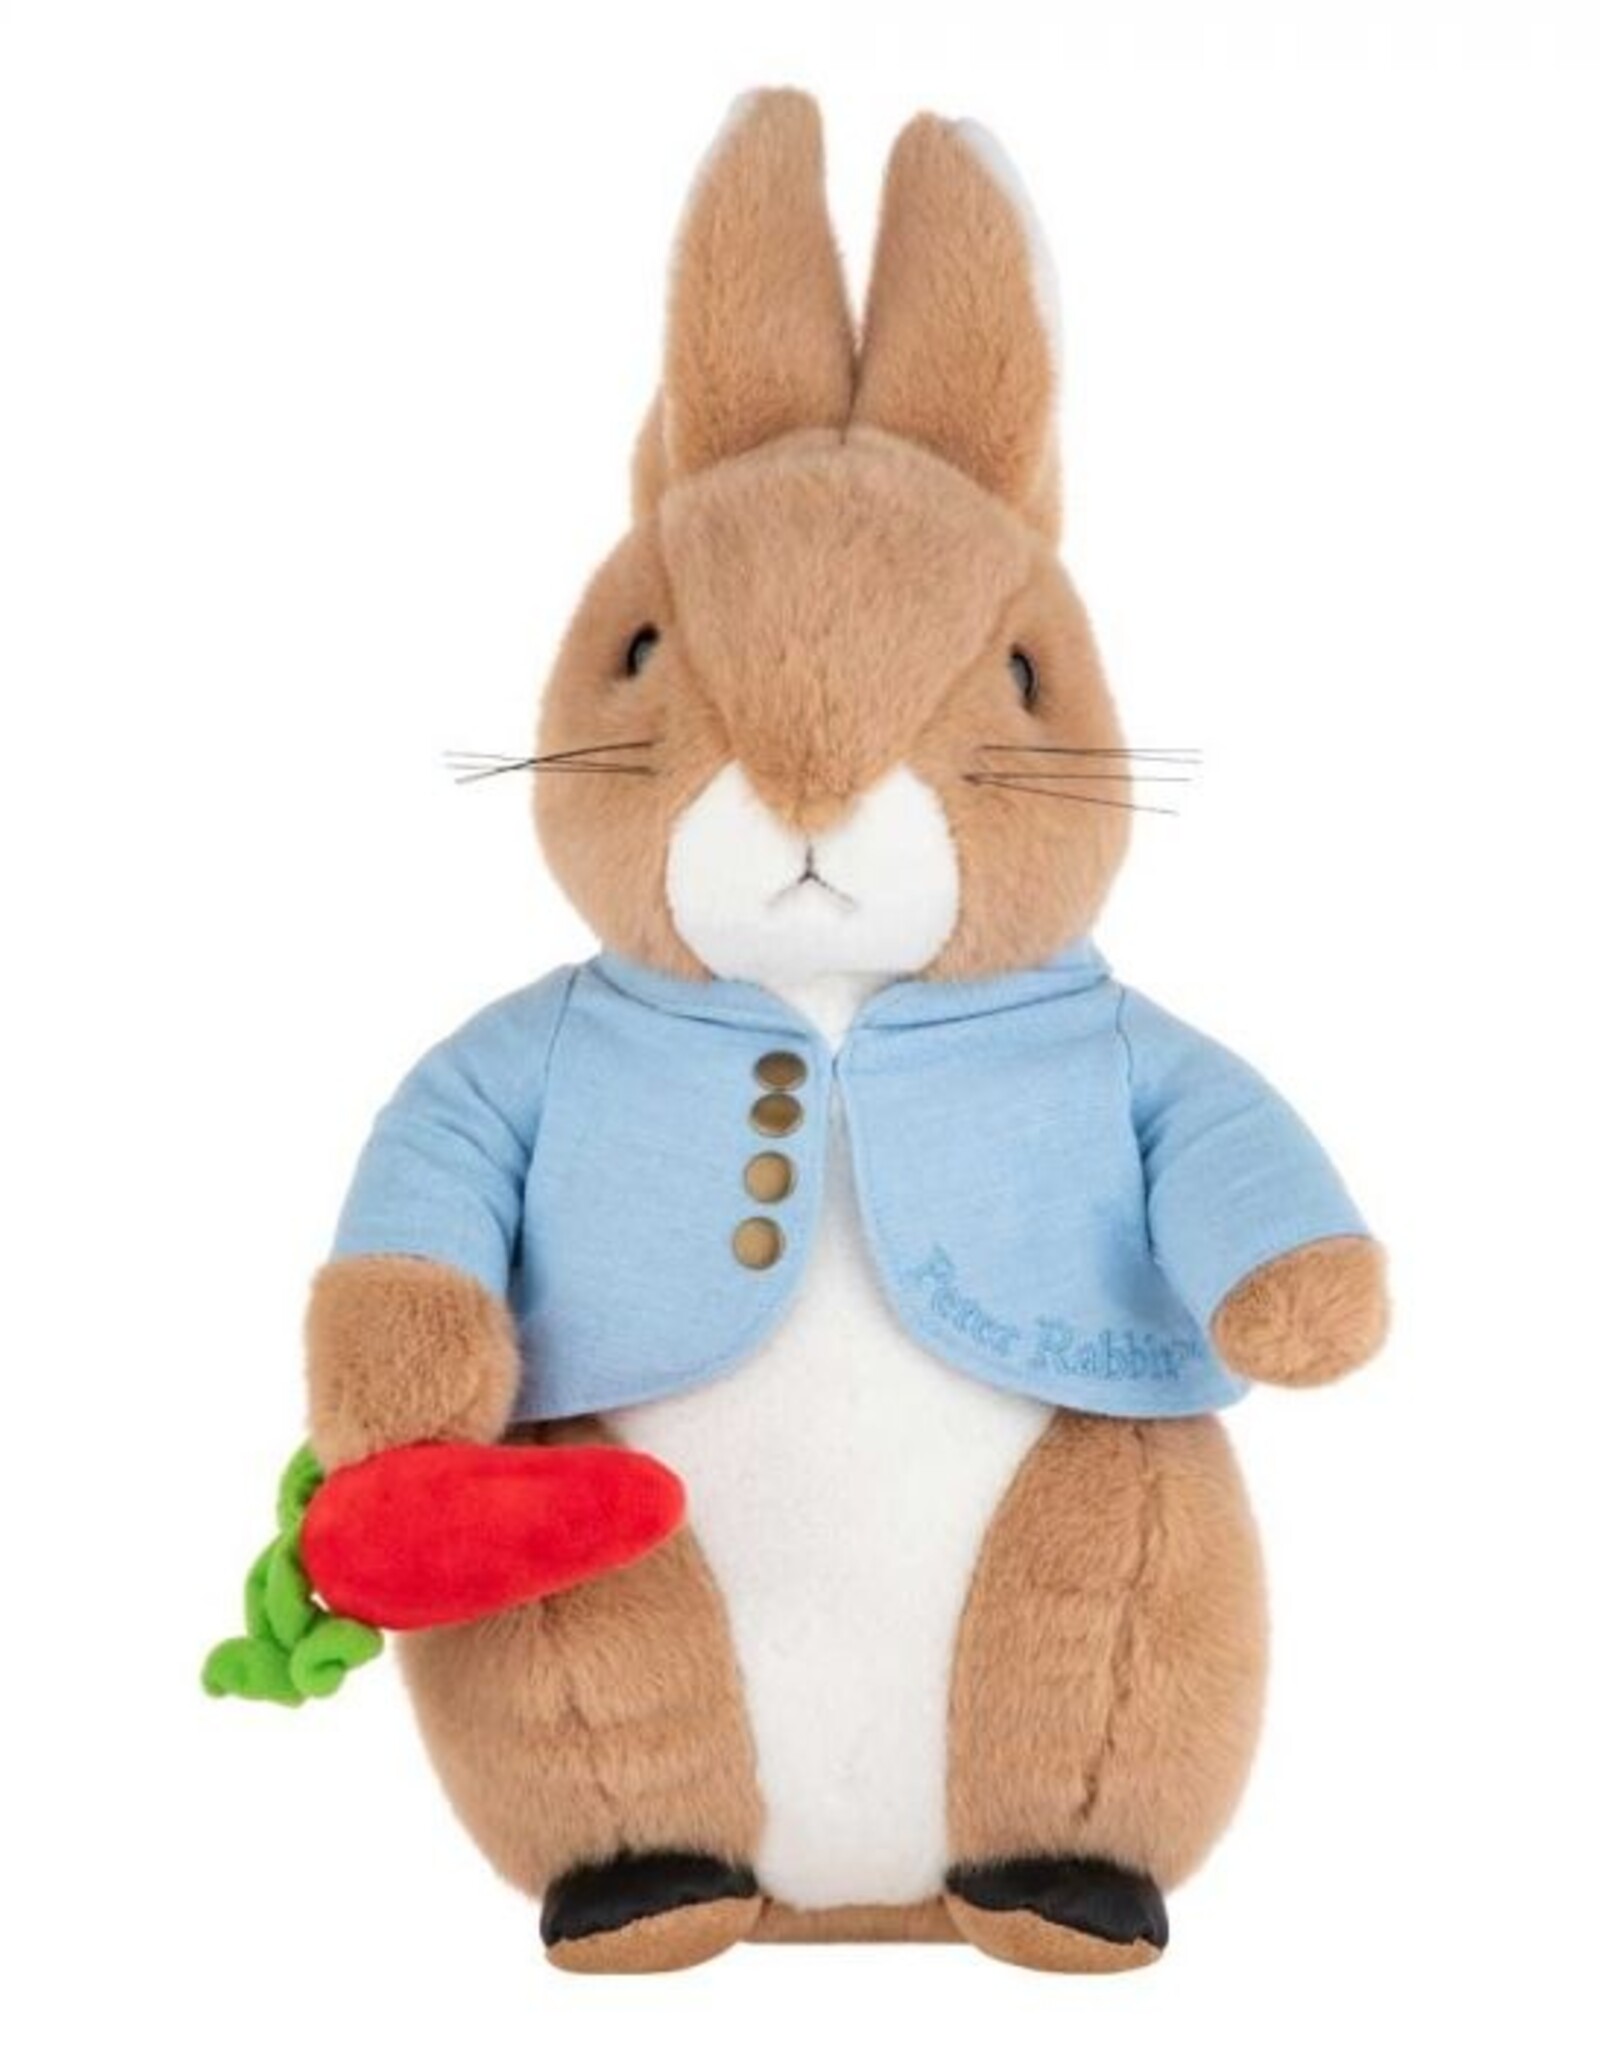 Peter Rabbit Peter Rabbit Limited Edition 120th Anniversary